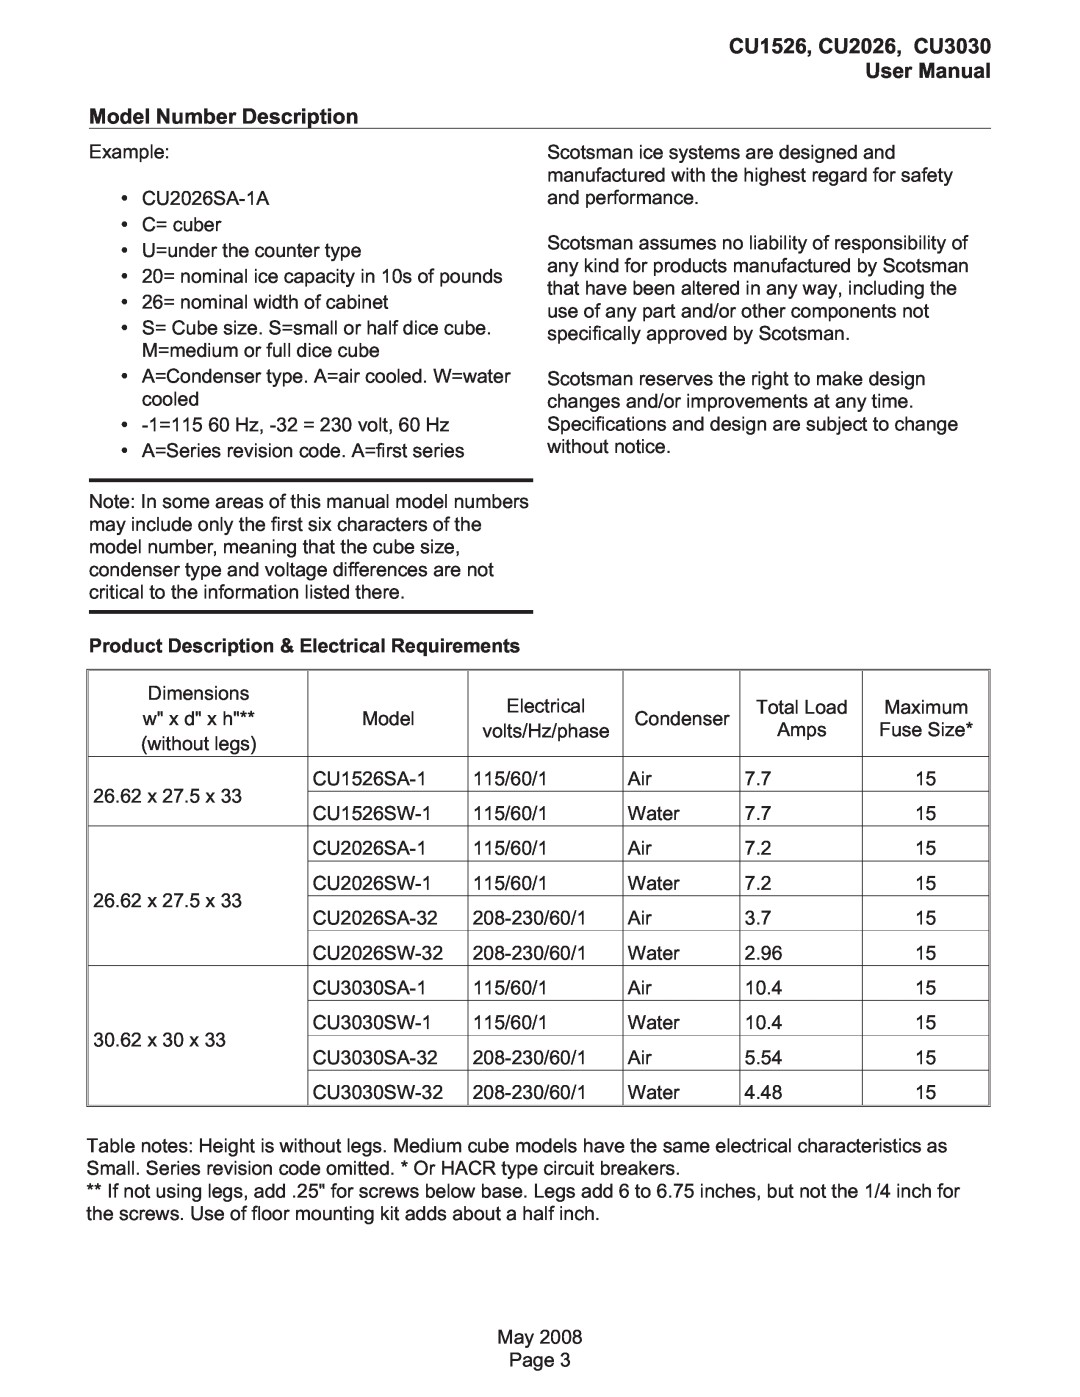 Scotsman Ice CU1526, CU2026 user manual Product Description & Electrical Requirements 